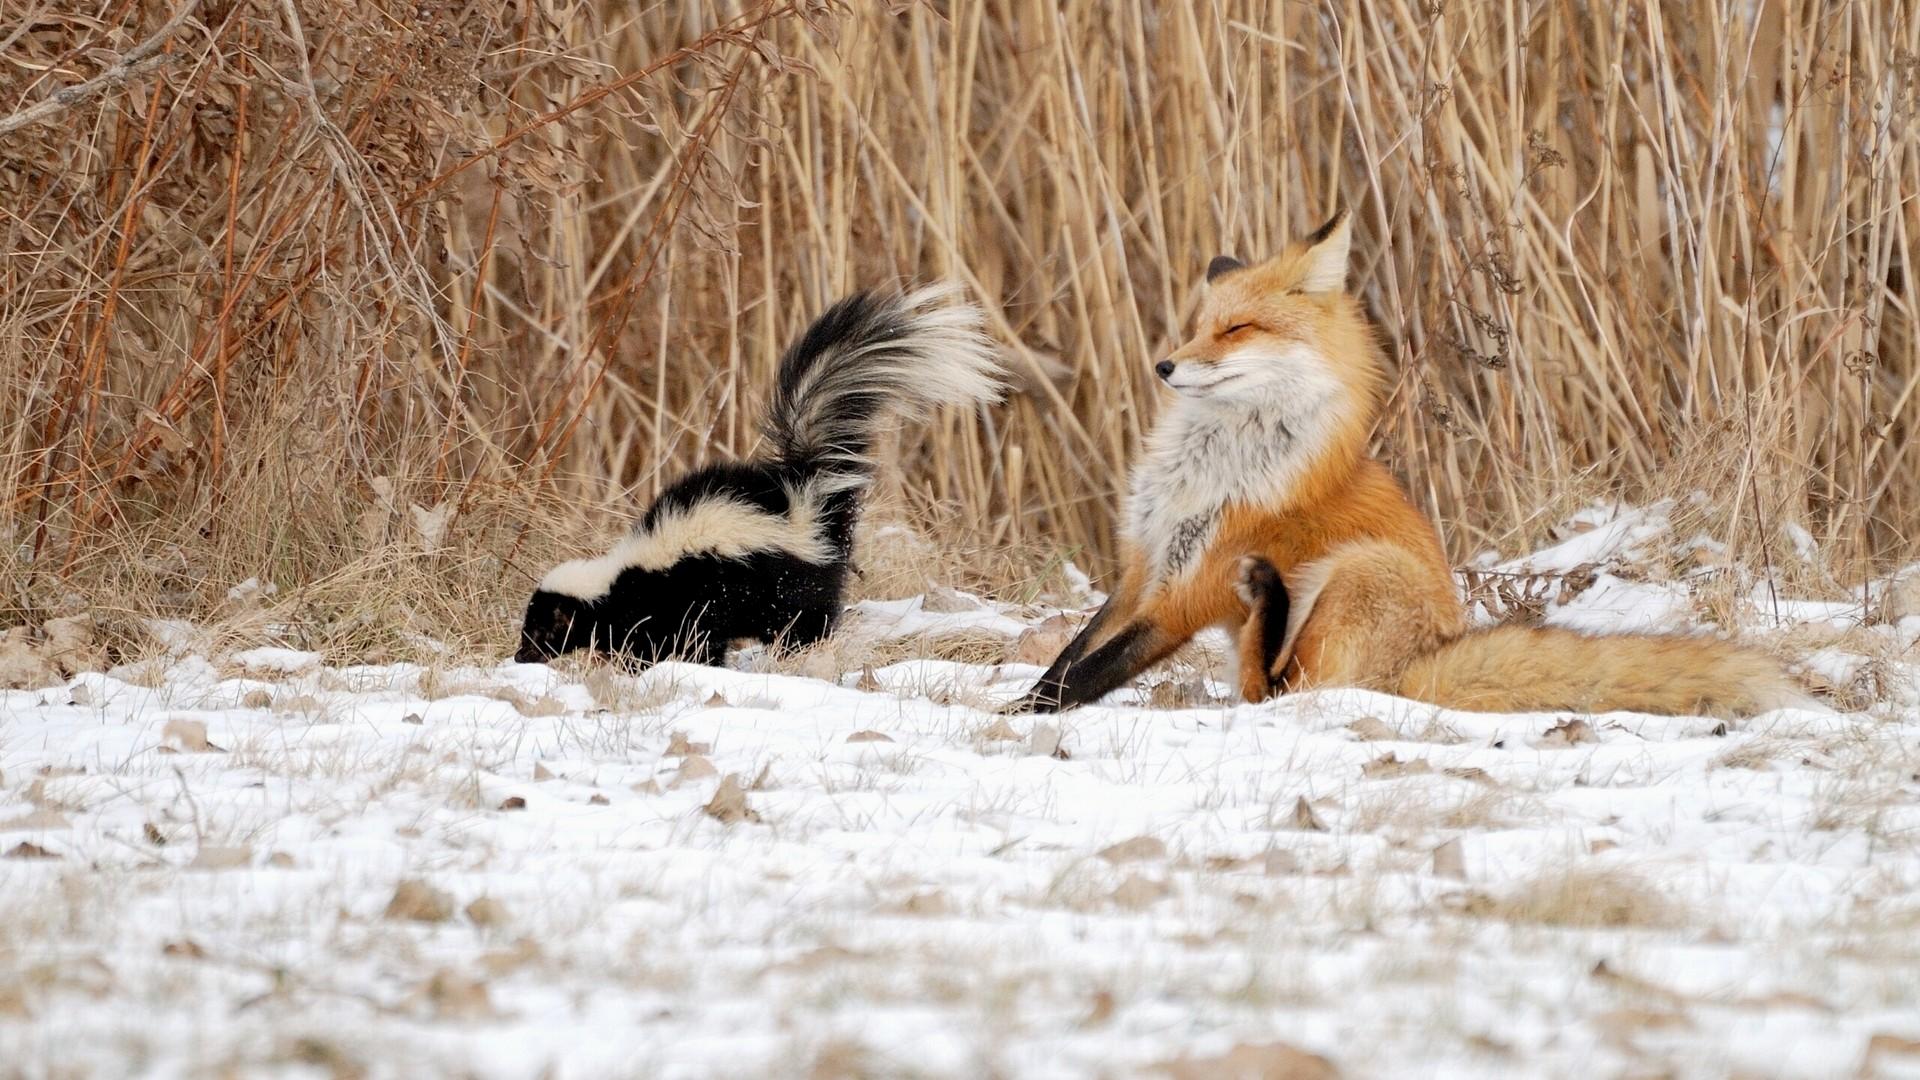 Winter-Wildlife-fox-skunk-reeds-winter-wild-animals-funny-photo-wallpaper-wp68011524.jpg